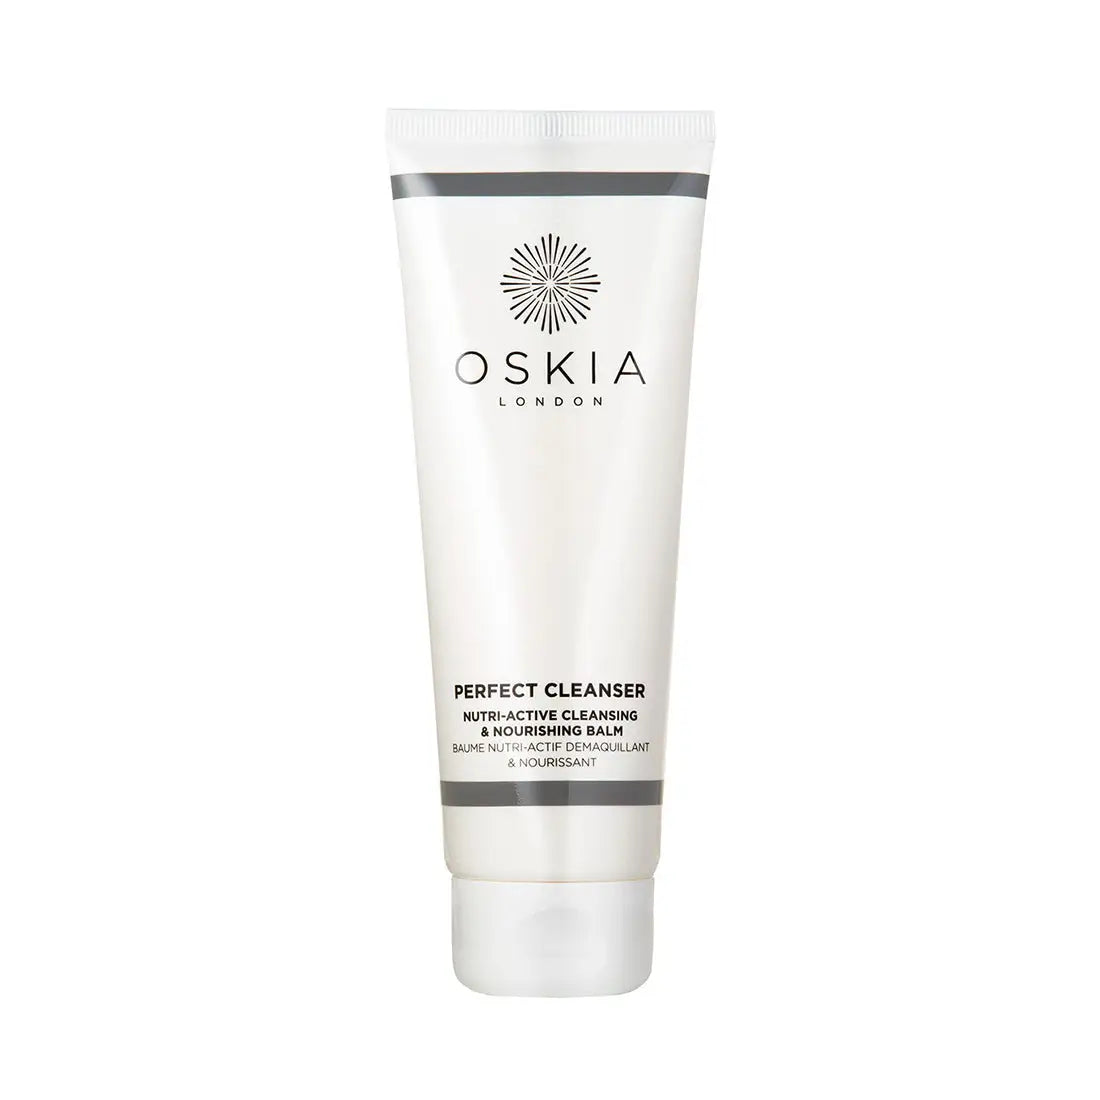 Oskia Skincare Perfect Cleanser 125ml